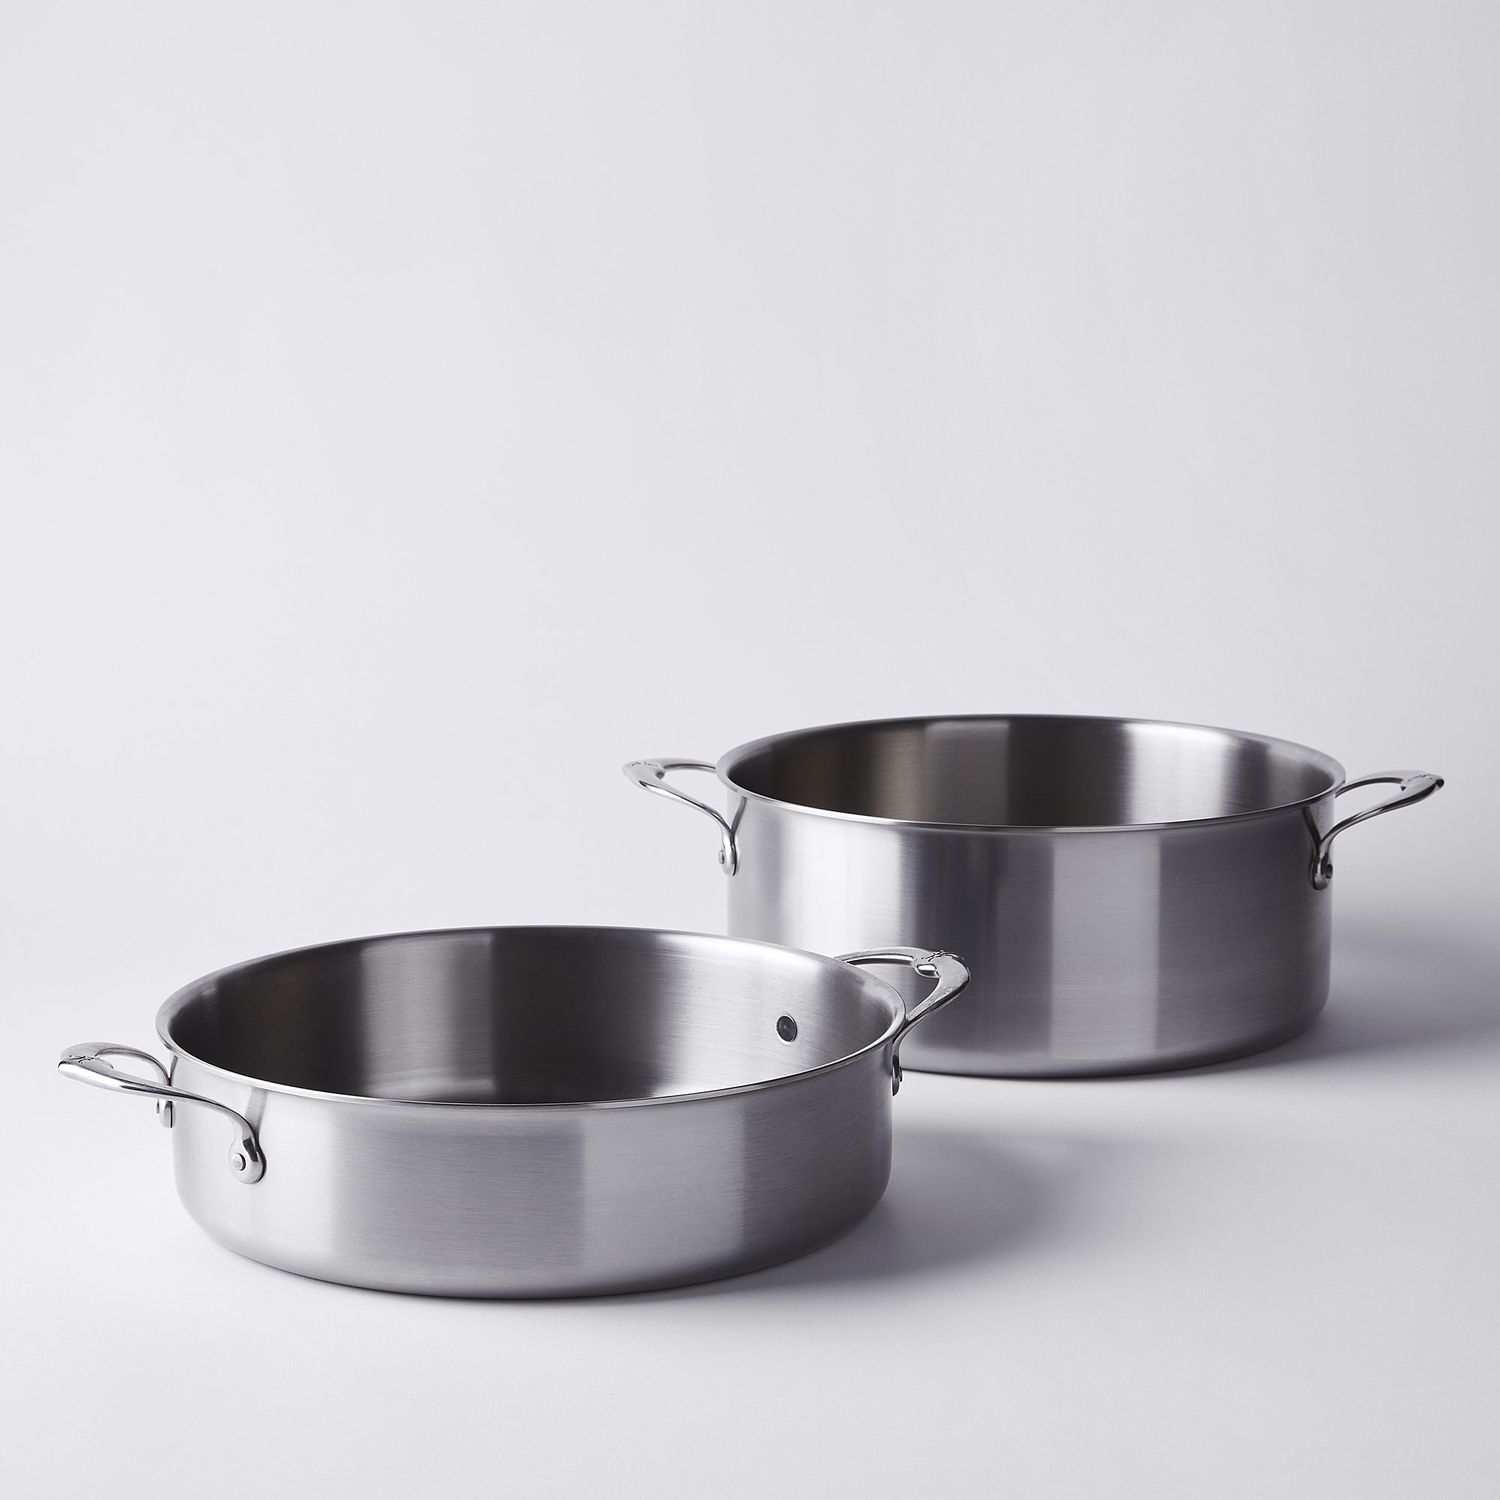 Thomas Keller Insignia Stainless Steel Rondeau Pan, 2 Sizes on Food52